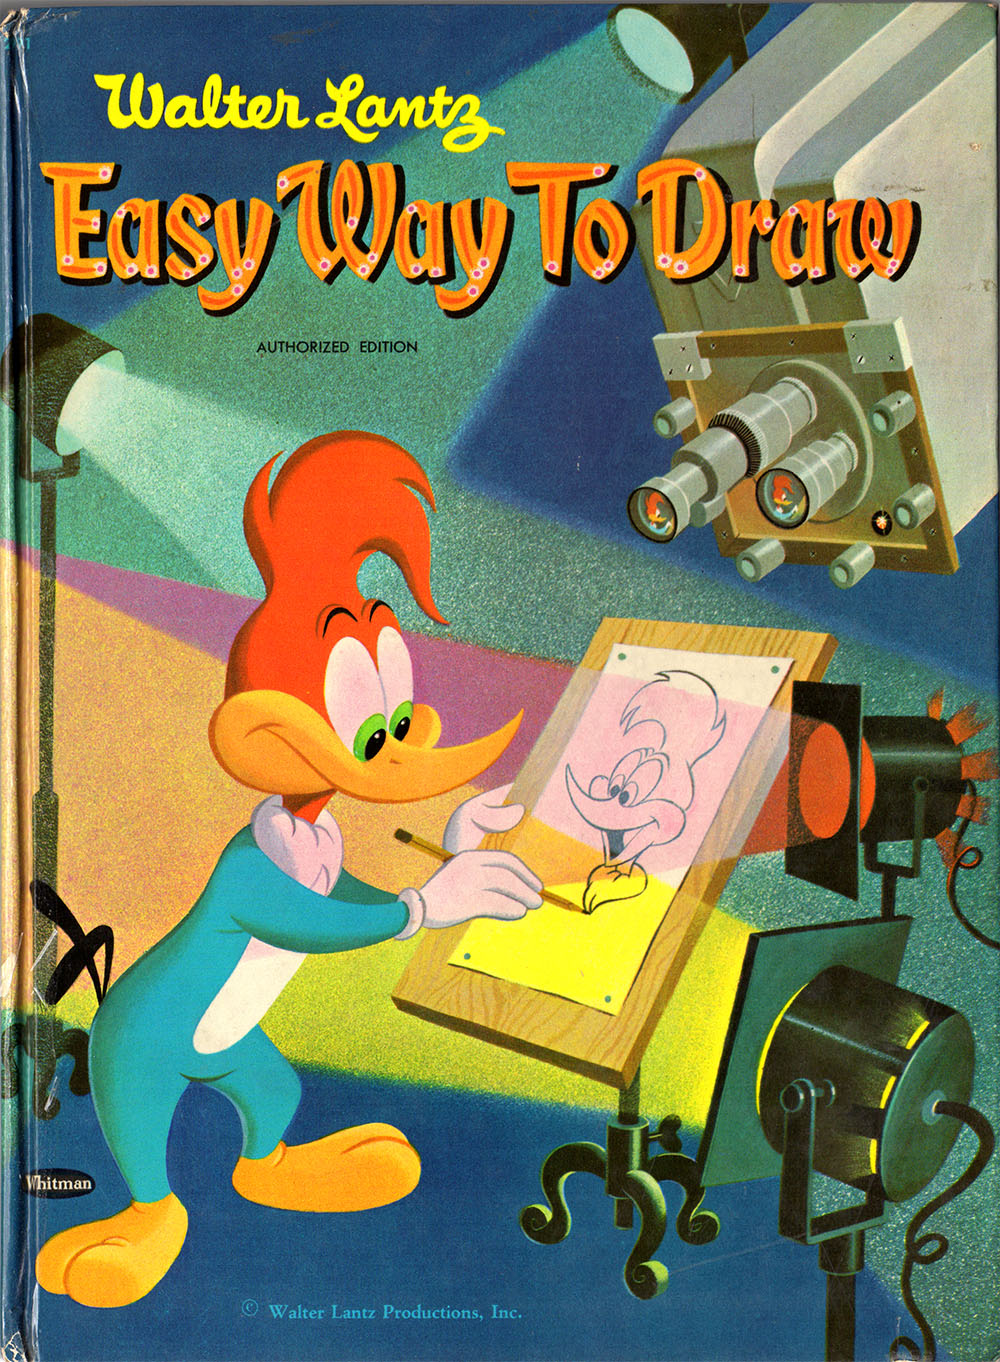 Cartoon SNAP: The 'Easy Way to Draw' -- 1958 Cartooning Book by Walter Lantz